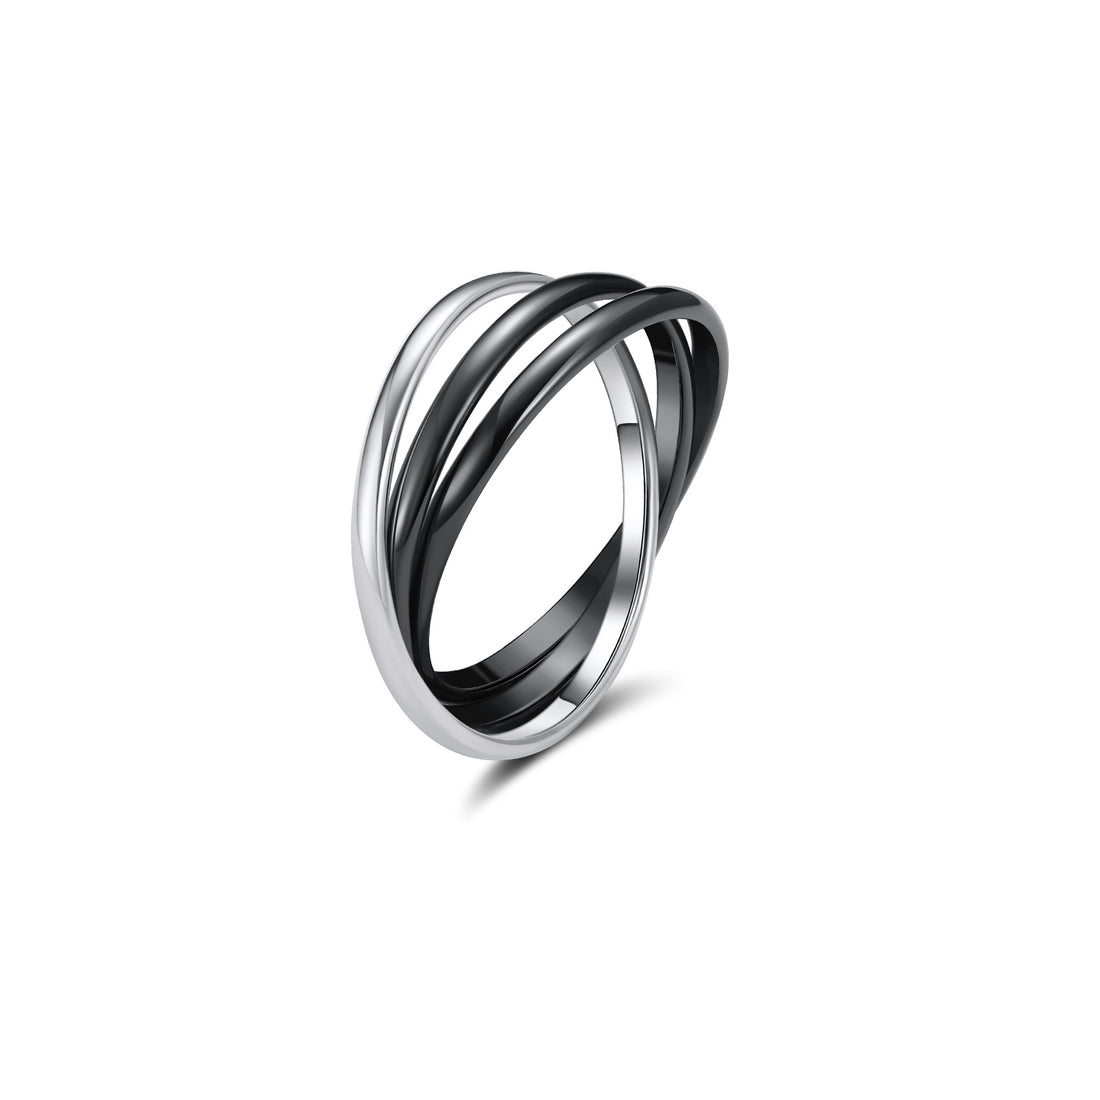 San Ring - Black Gold / Sterling Silver